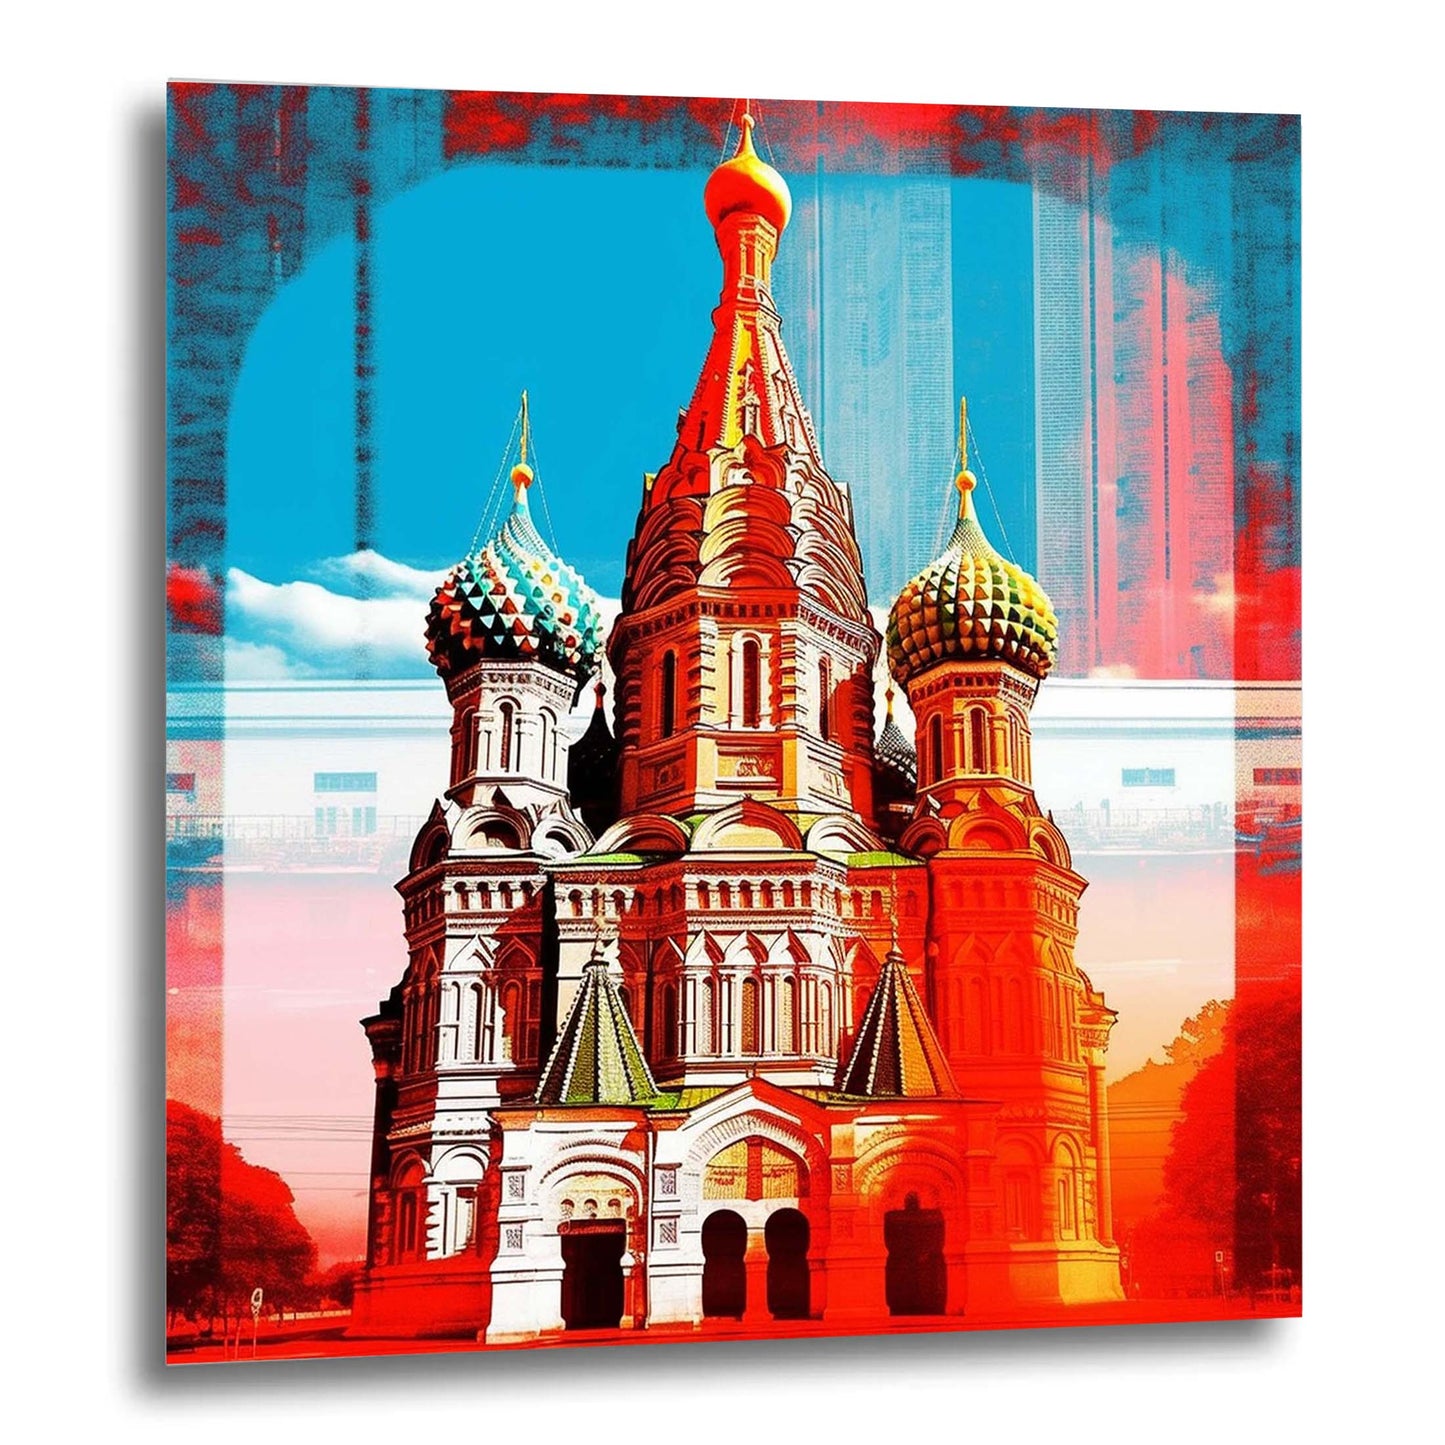 Moscow Kremlin - mural in pop art style